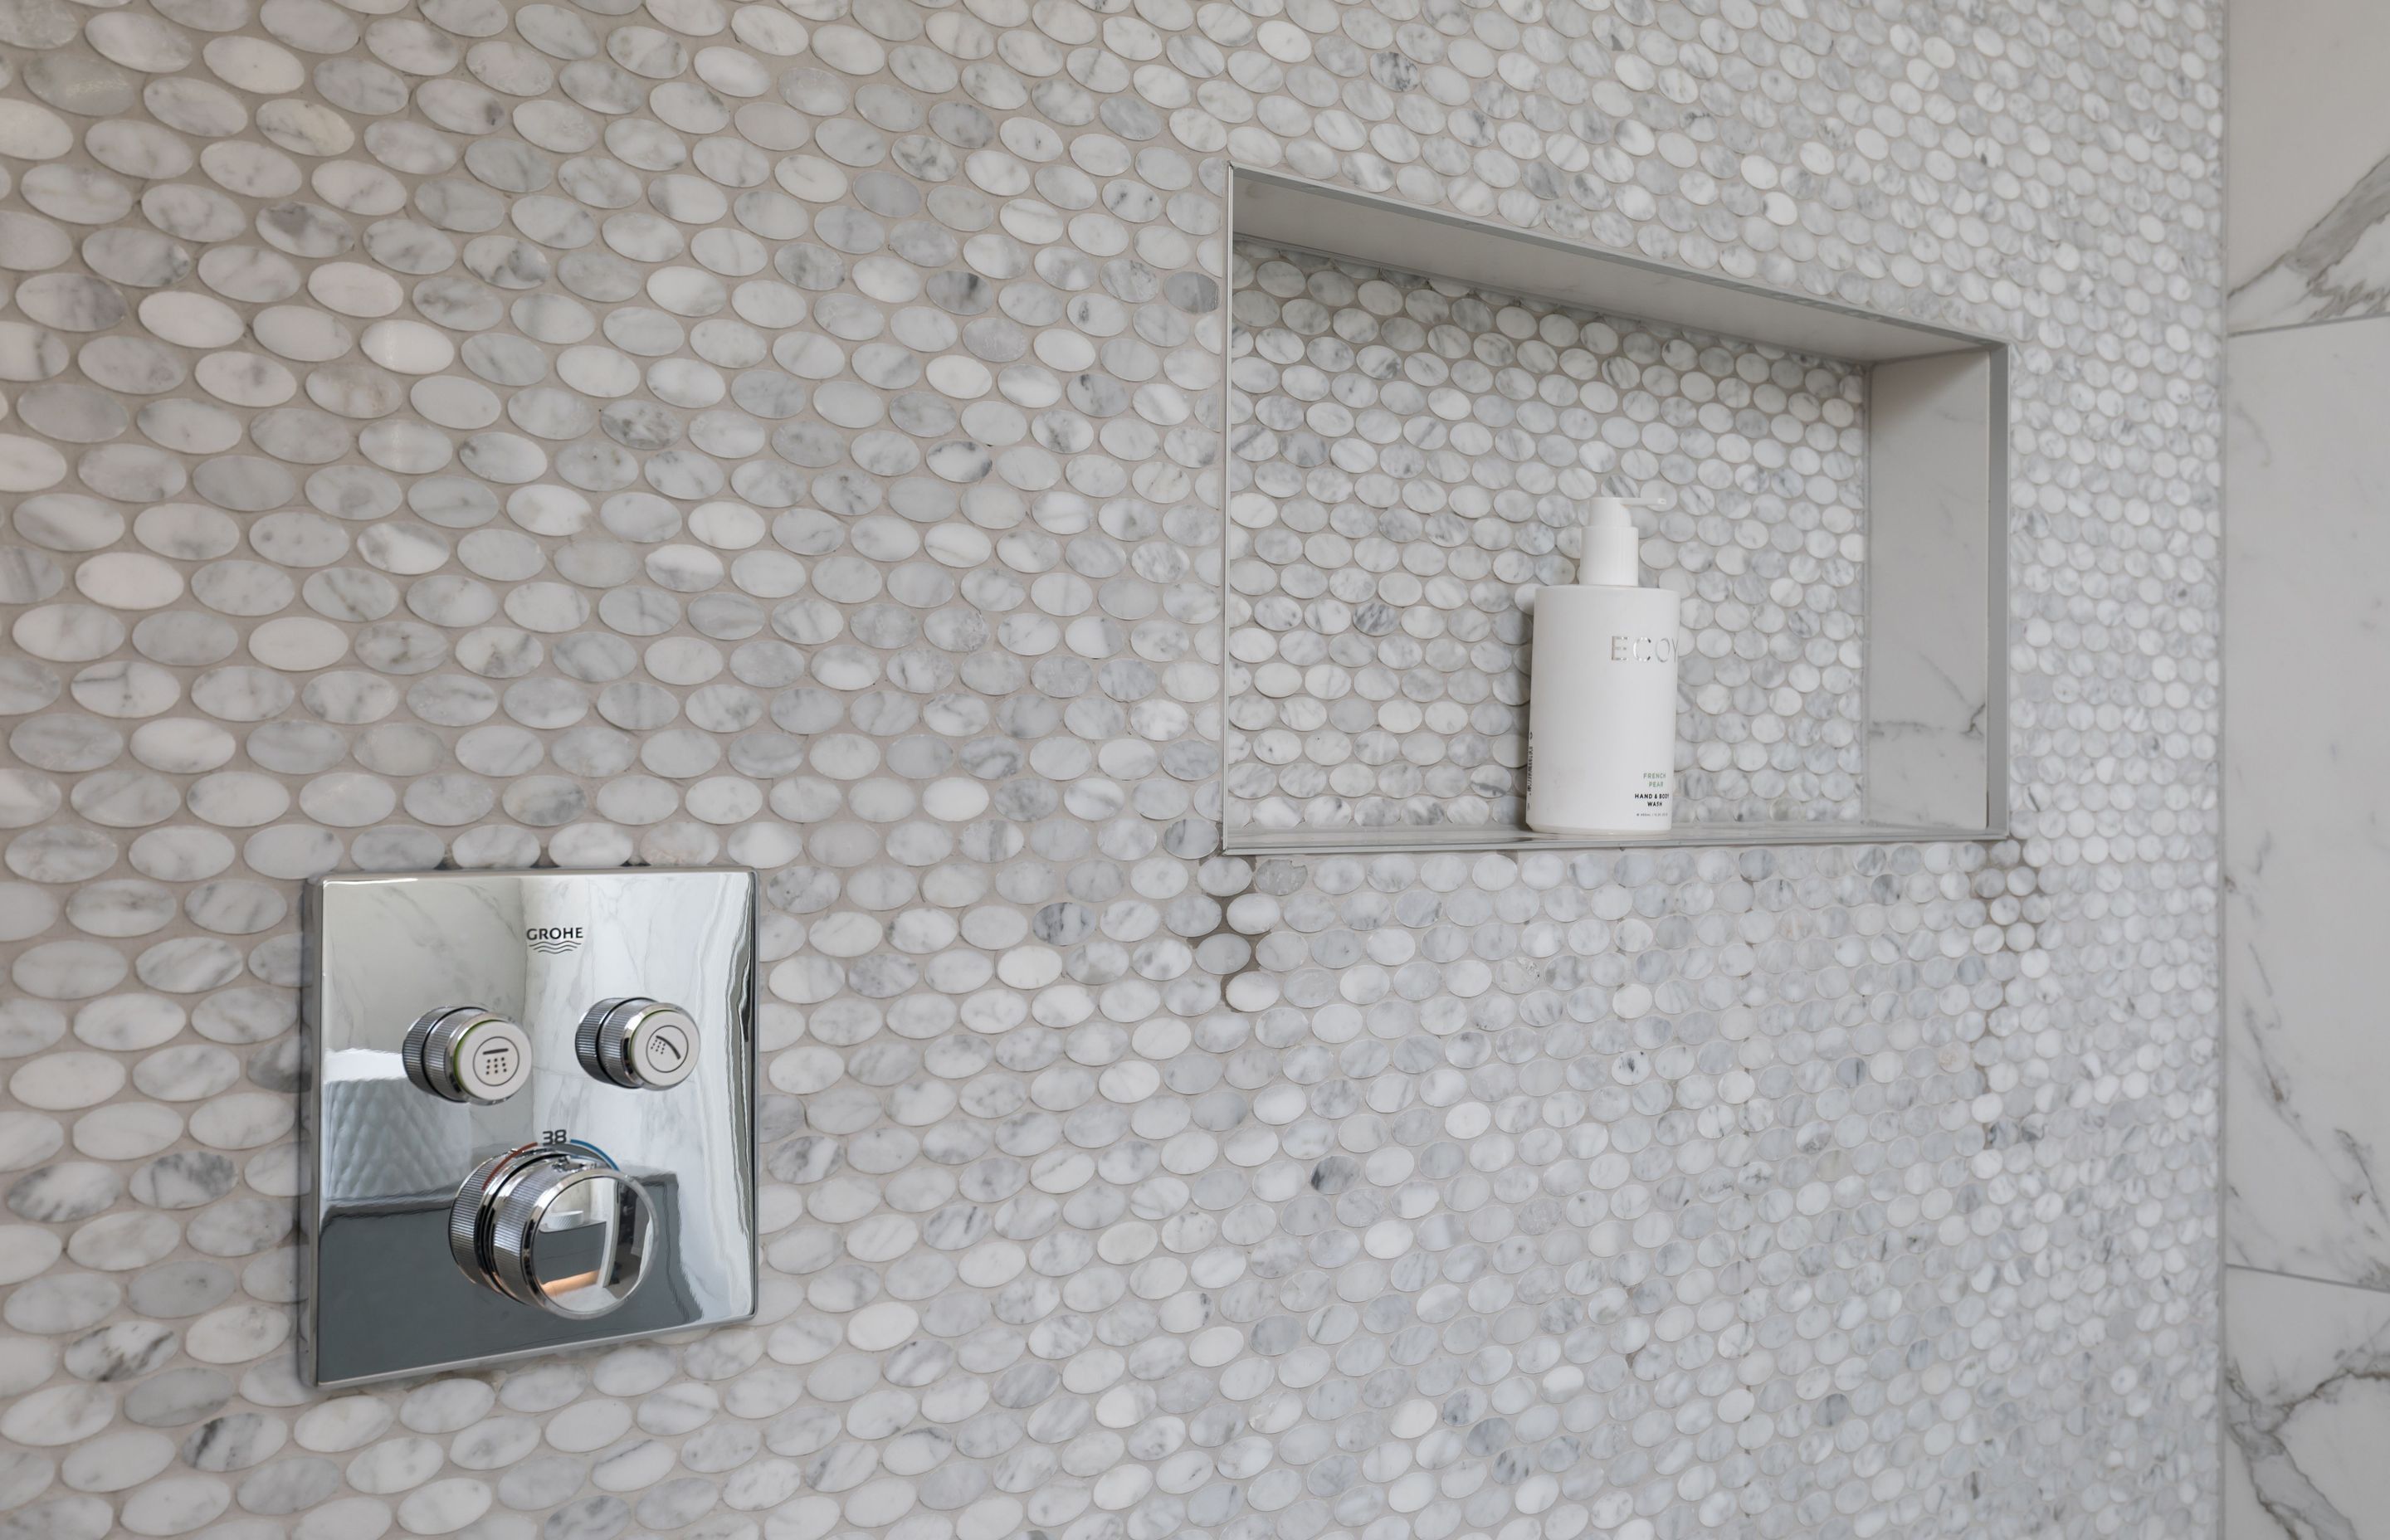 Ensuite Bathroom - adding texture and pattern through carrara marble mosaic tiles